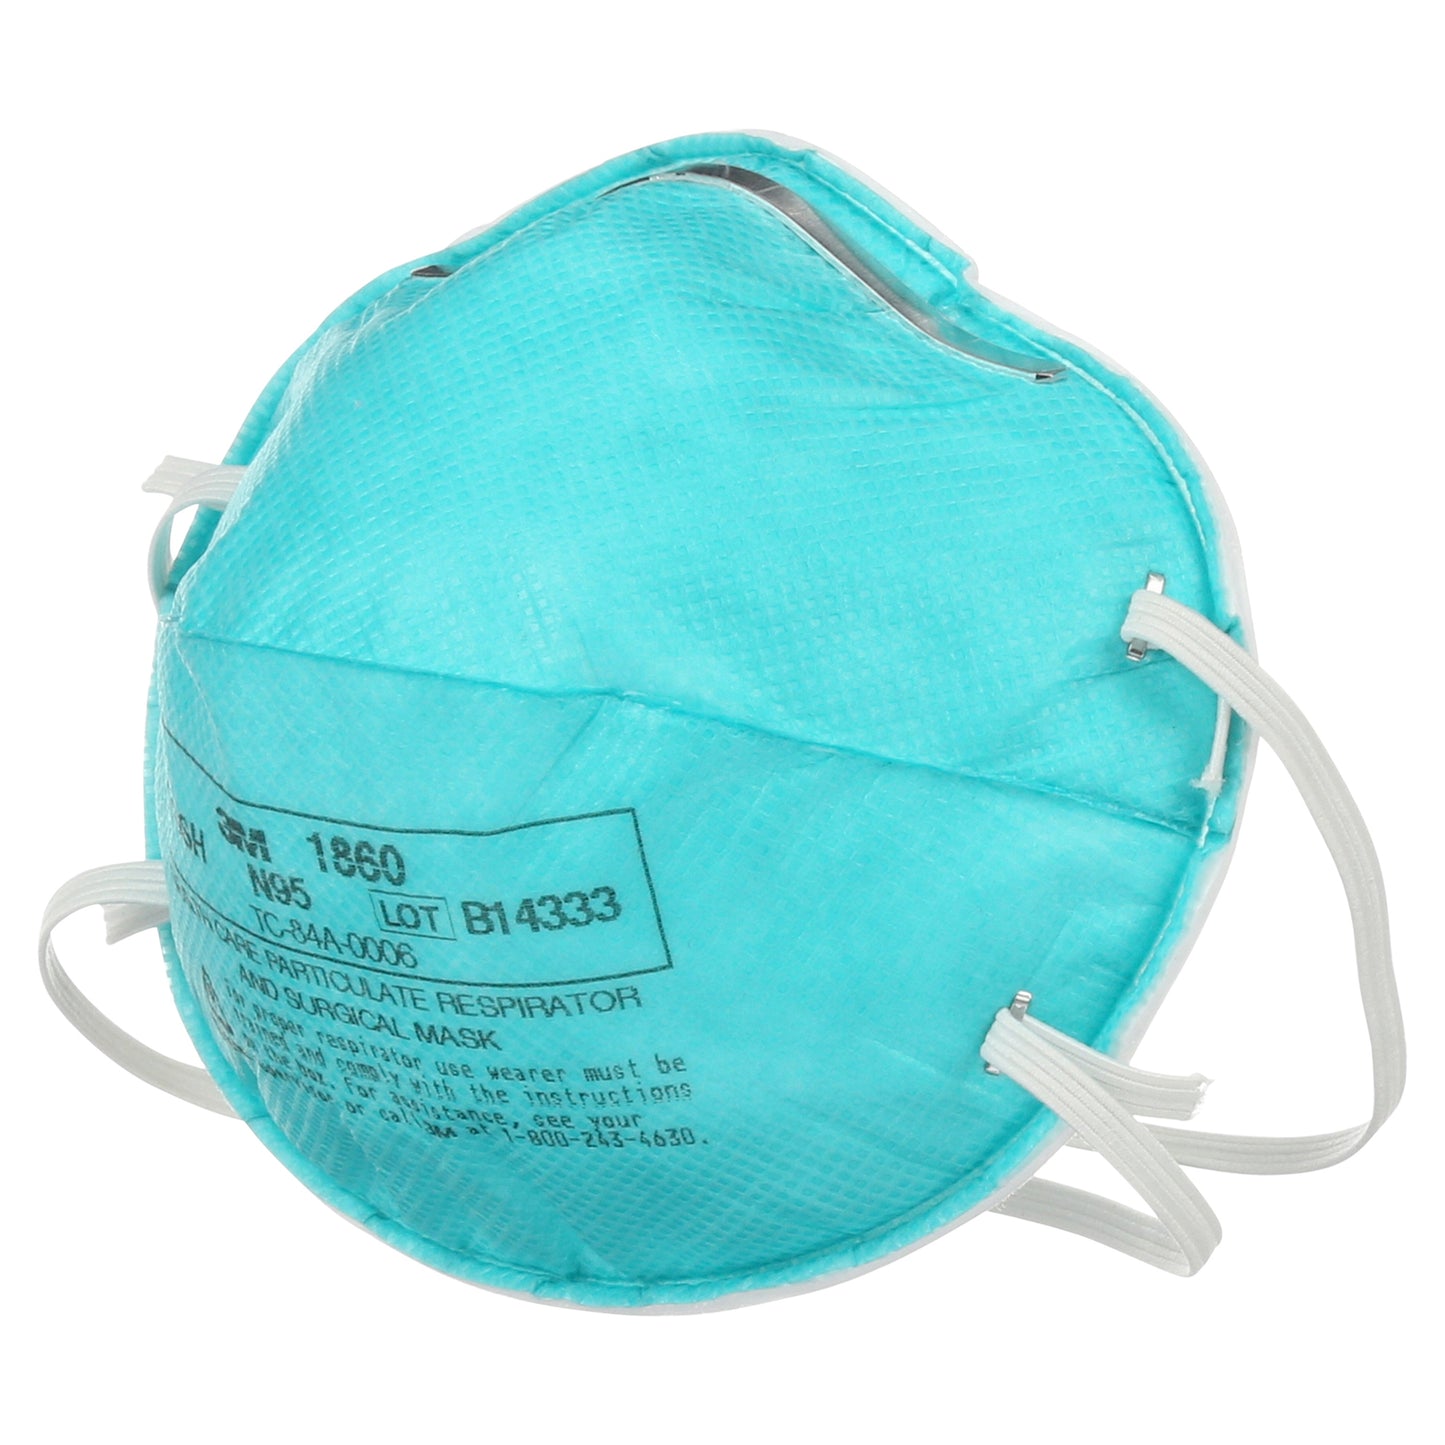 3M 1860 Healthcare NIOSH Surgical N95 Respirator Mask - Made in USA